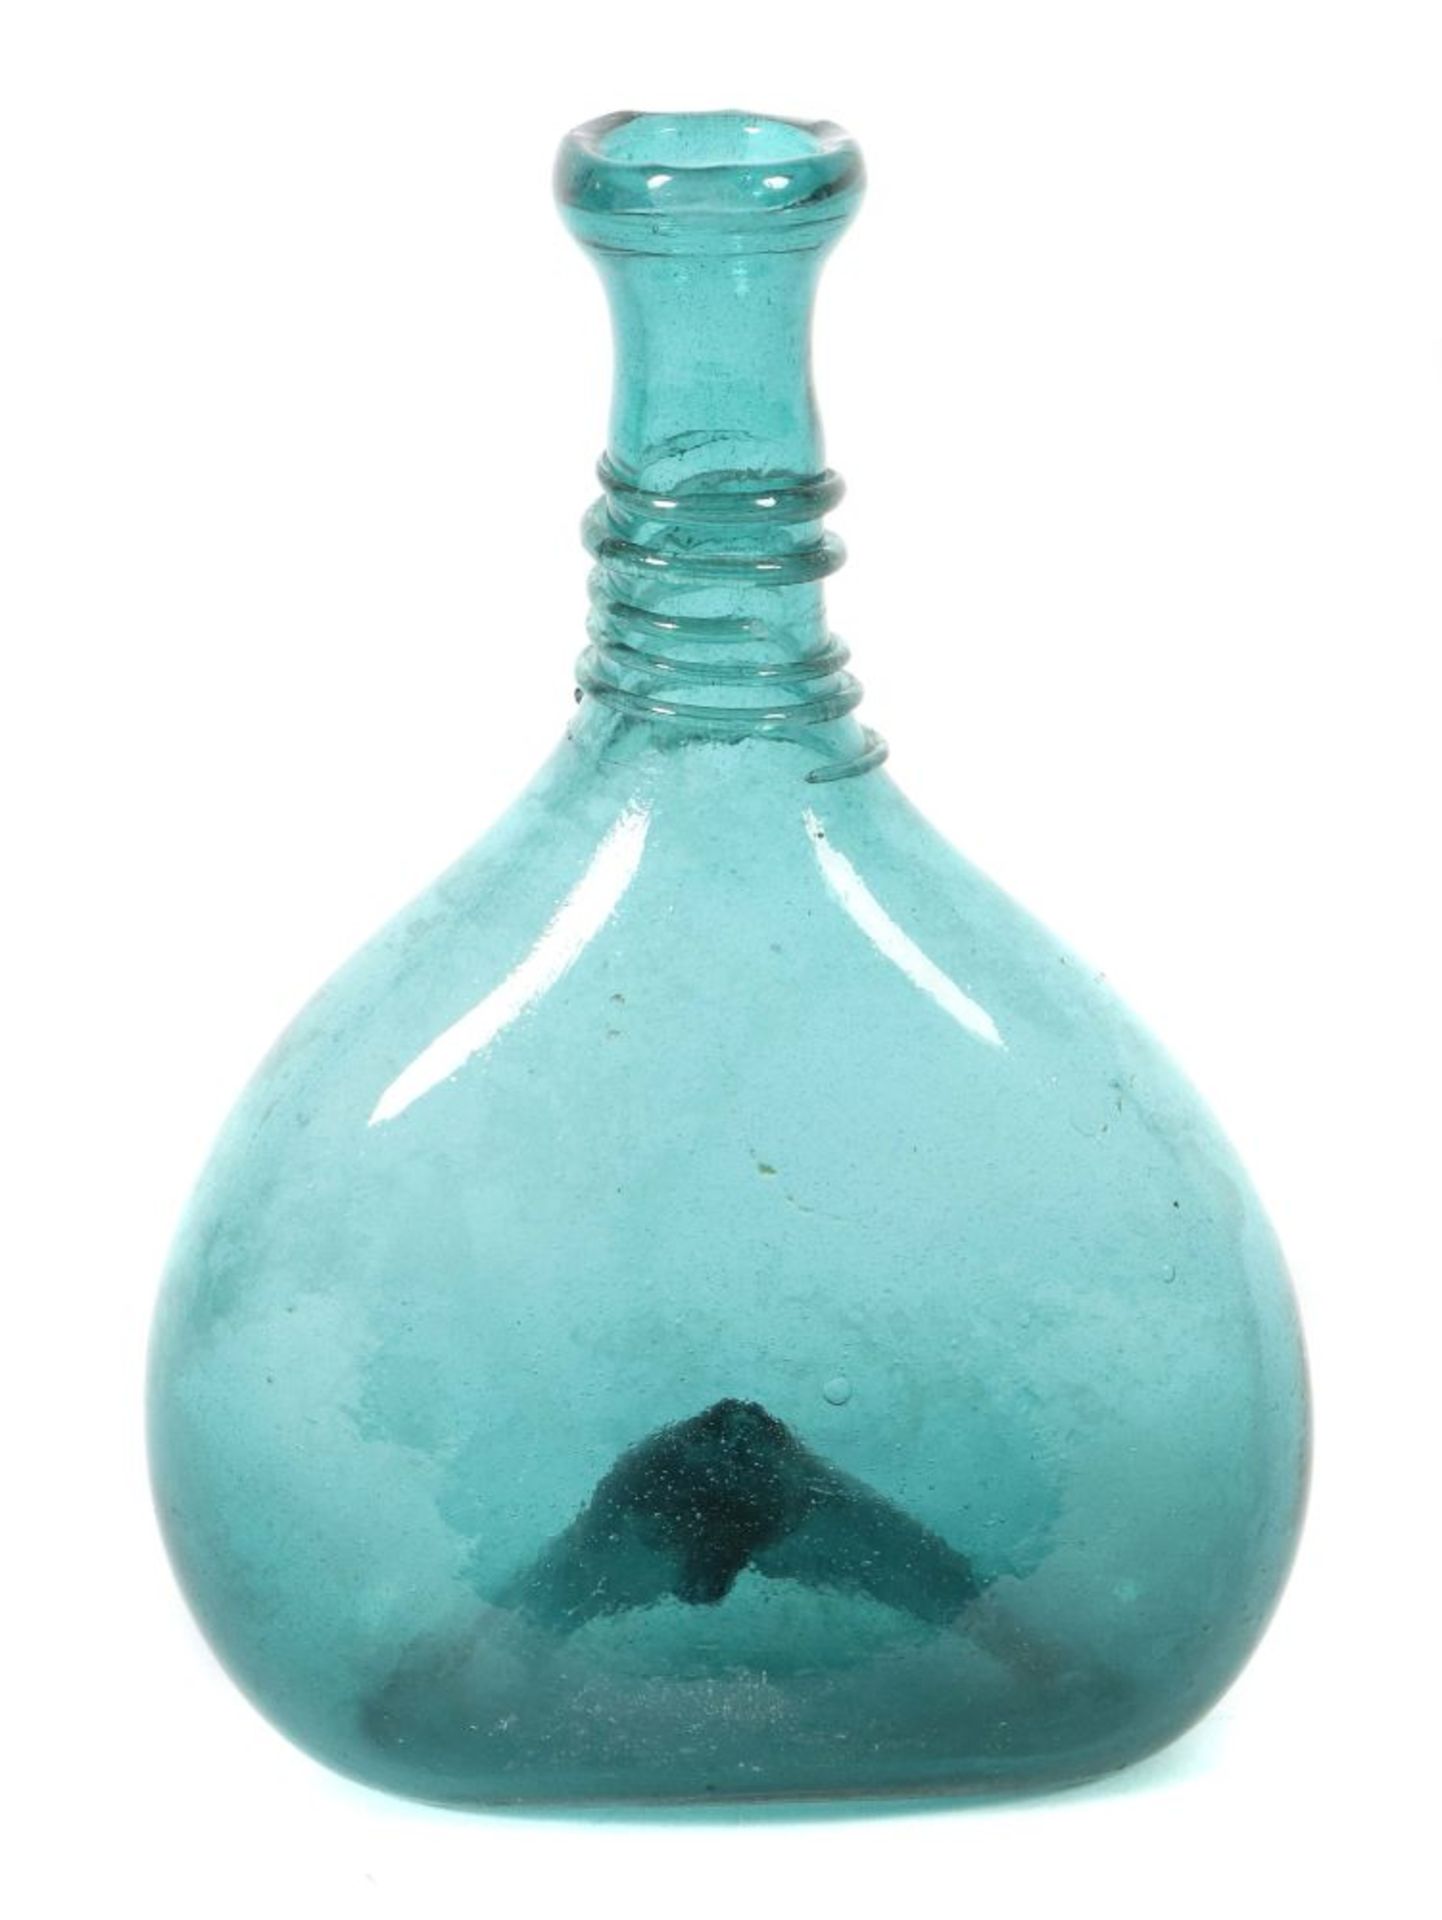 Fadenglas-Flasche wohl 18. Jh., türkis